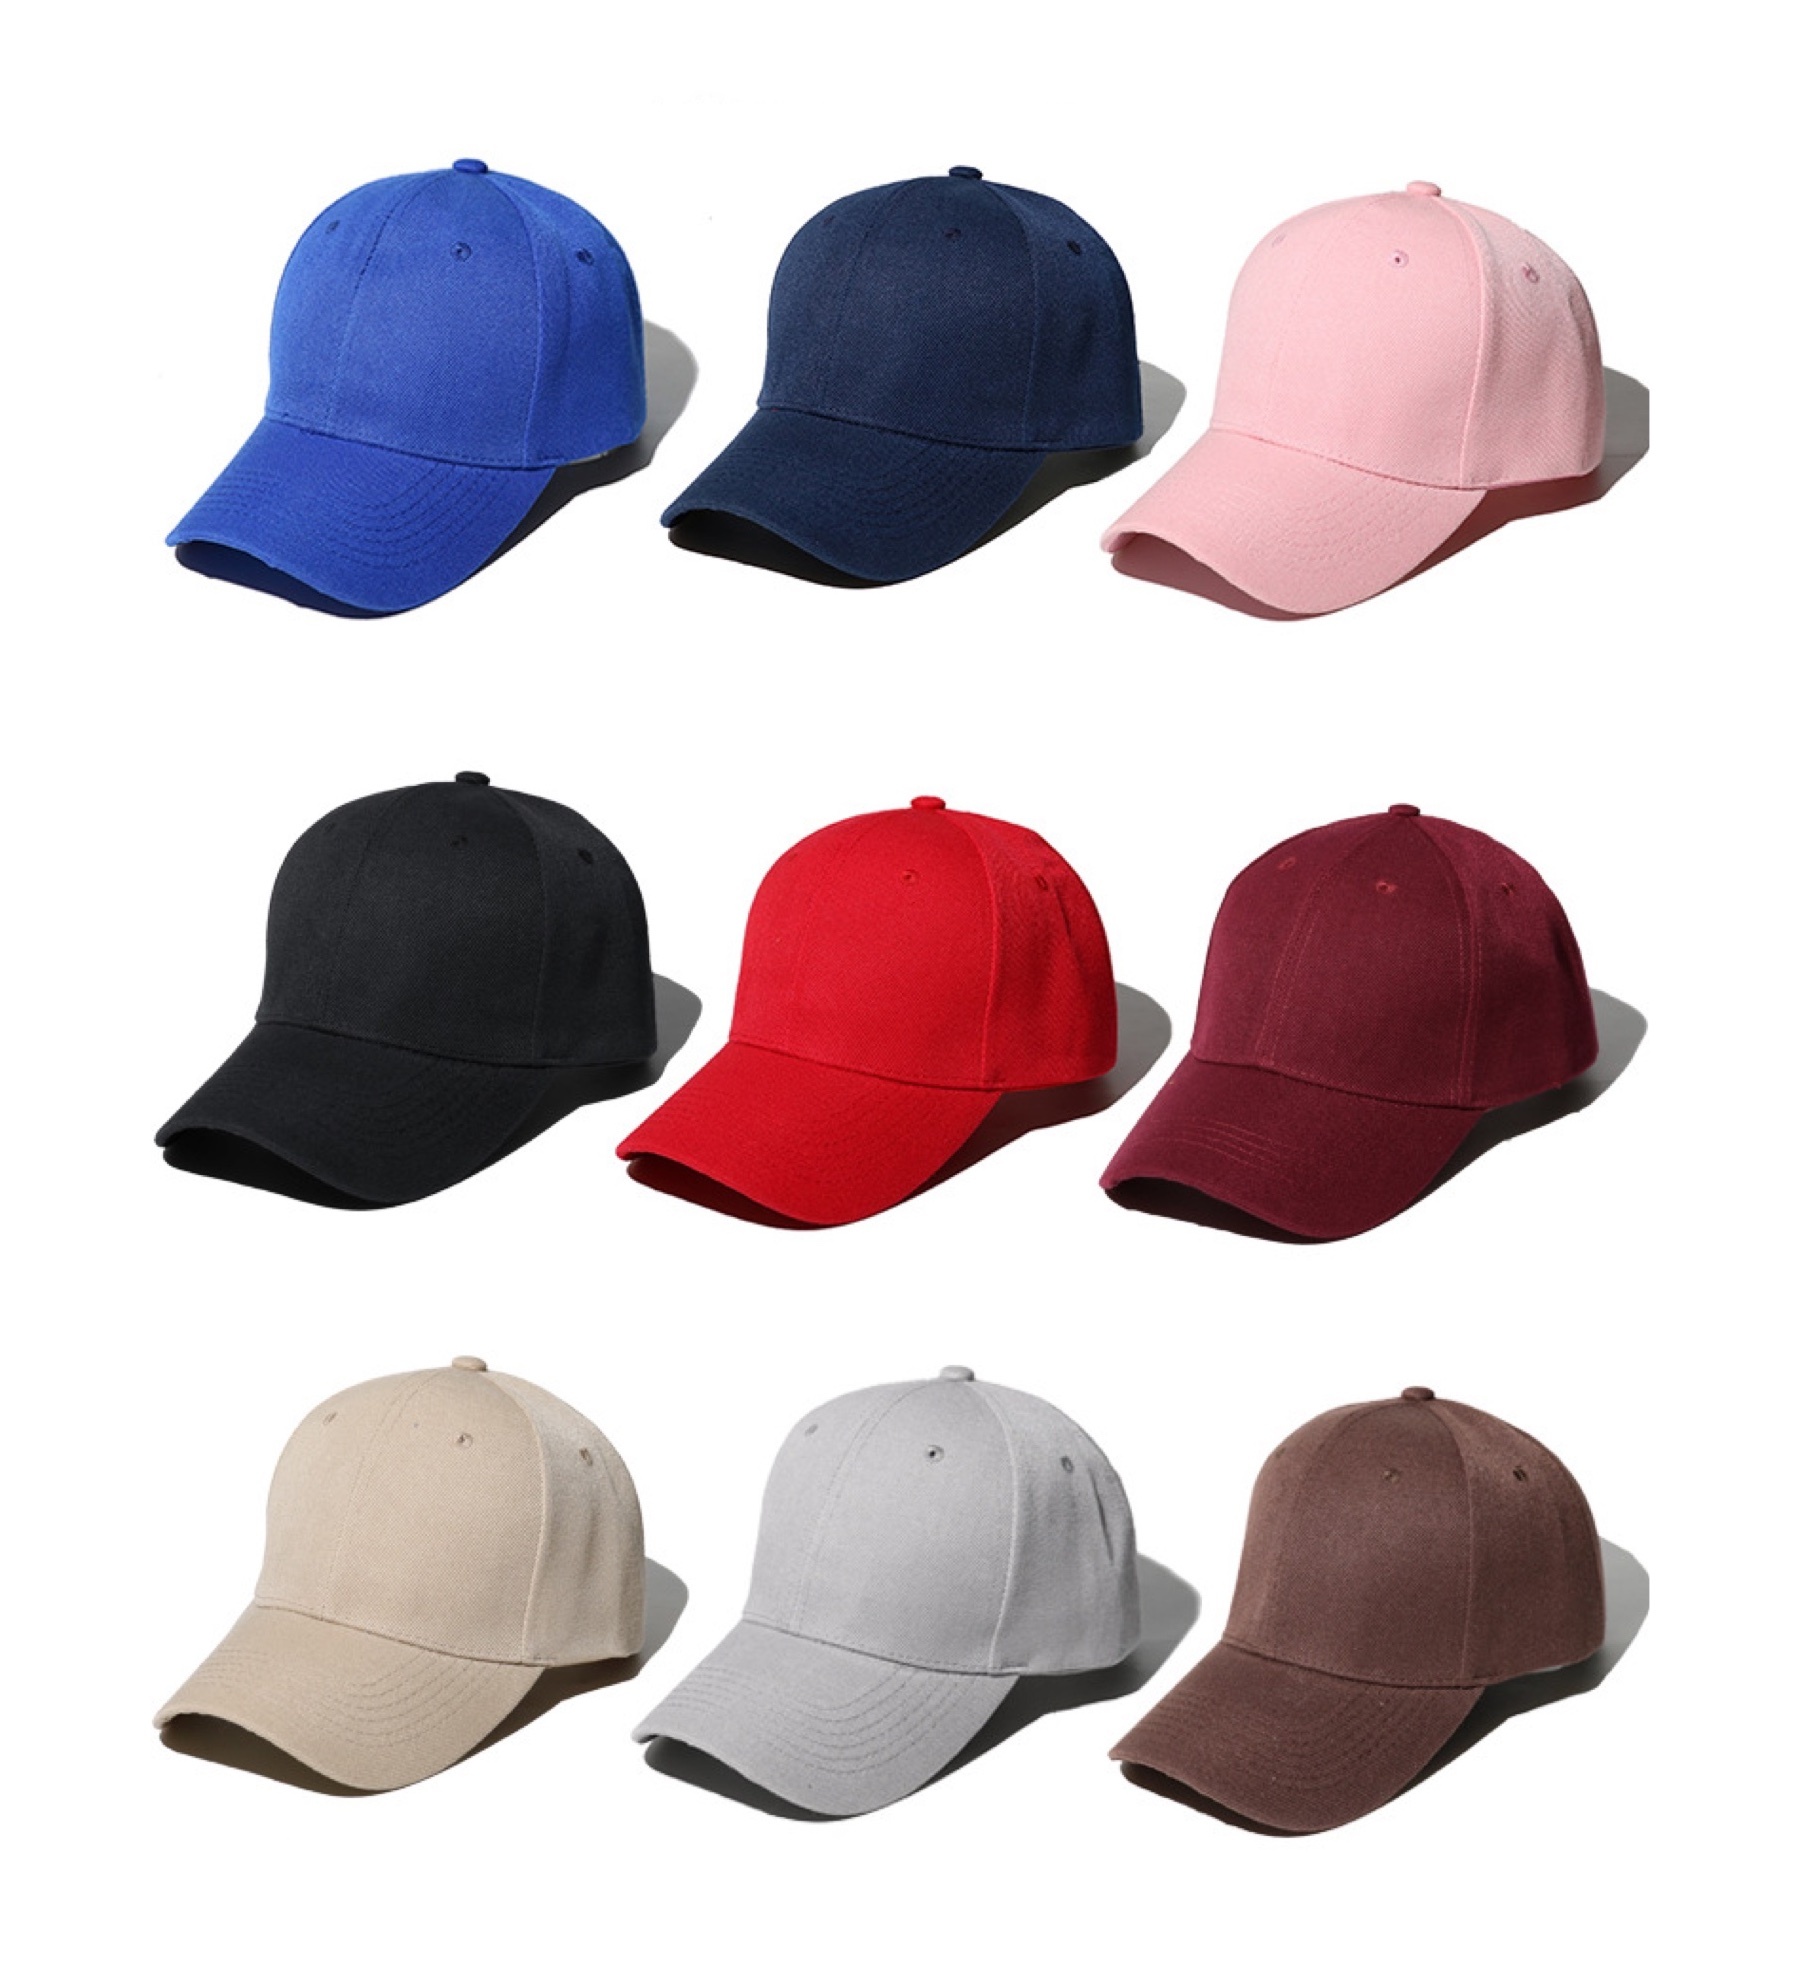 Baseball Cap -  Adjustable Fit Cap - Trucker Hat - Head Circumference 55-60 CM - Unisex for Sports Outdoors - Black-7